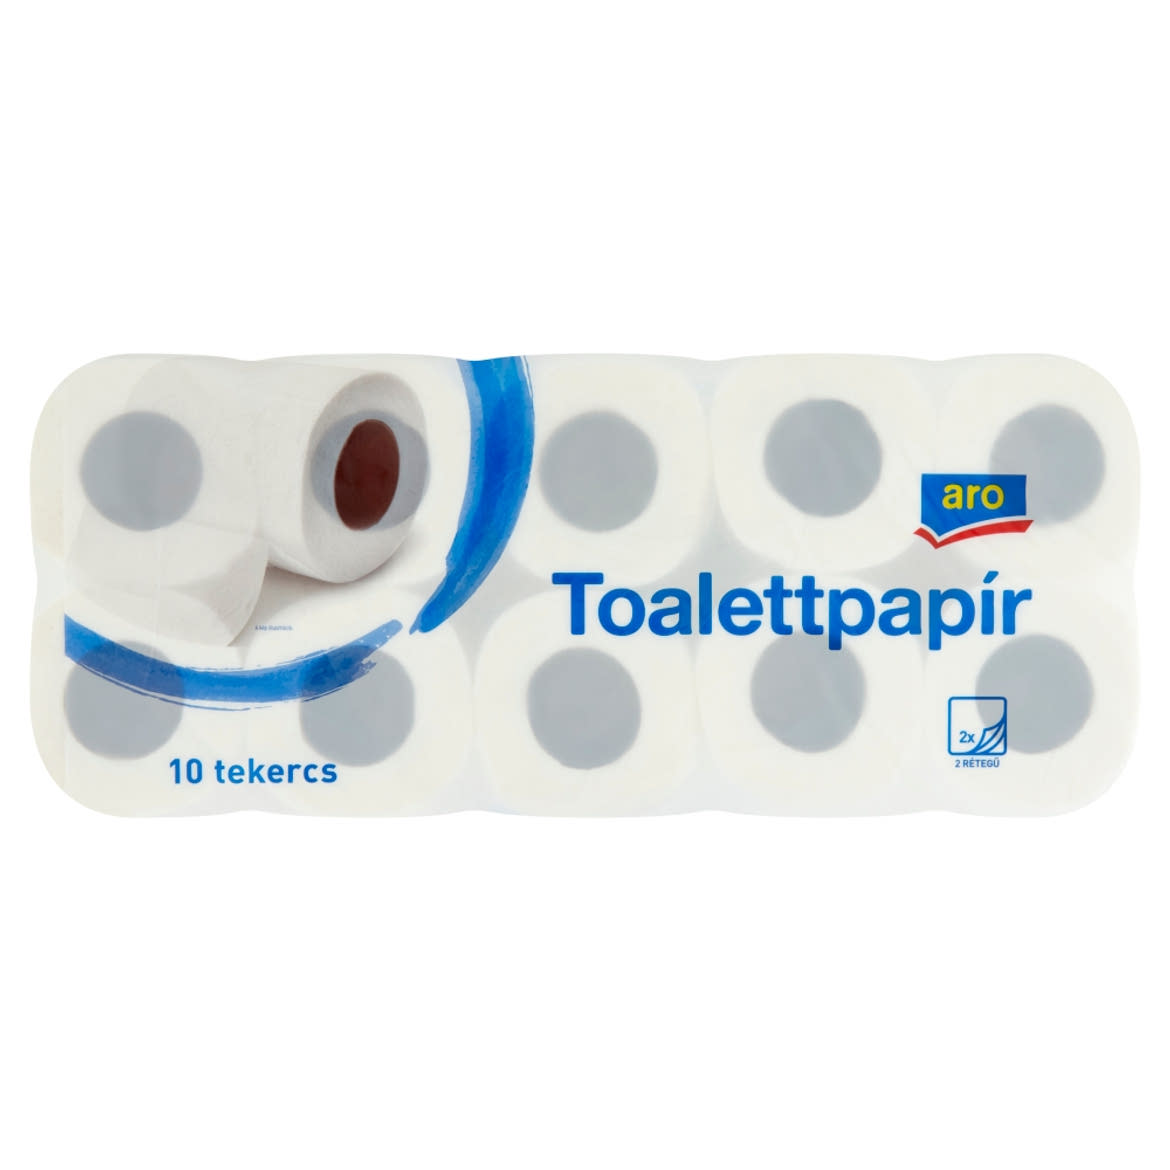 aro toalettpapír 2 rétegű